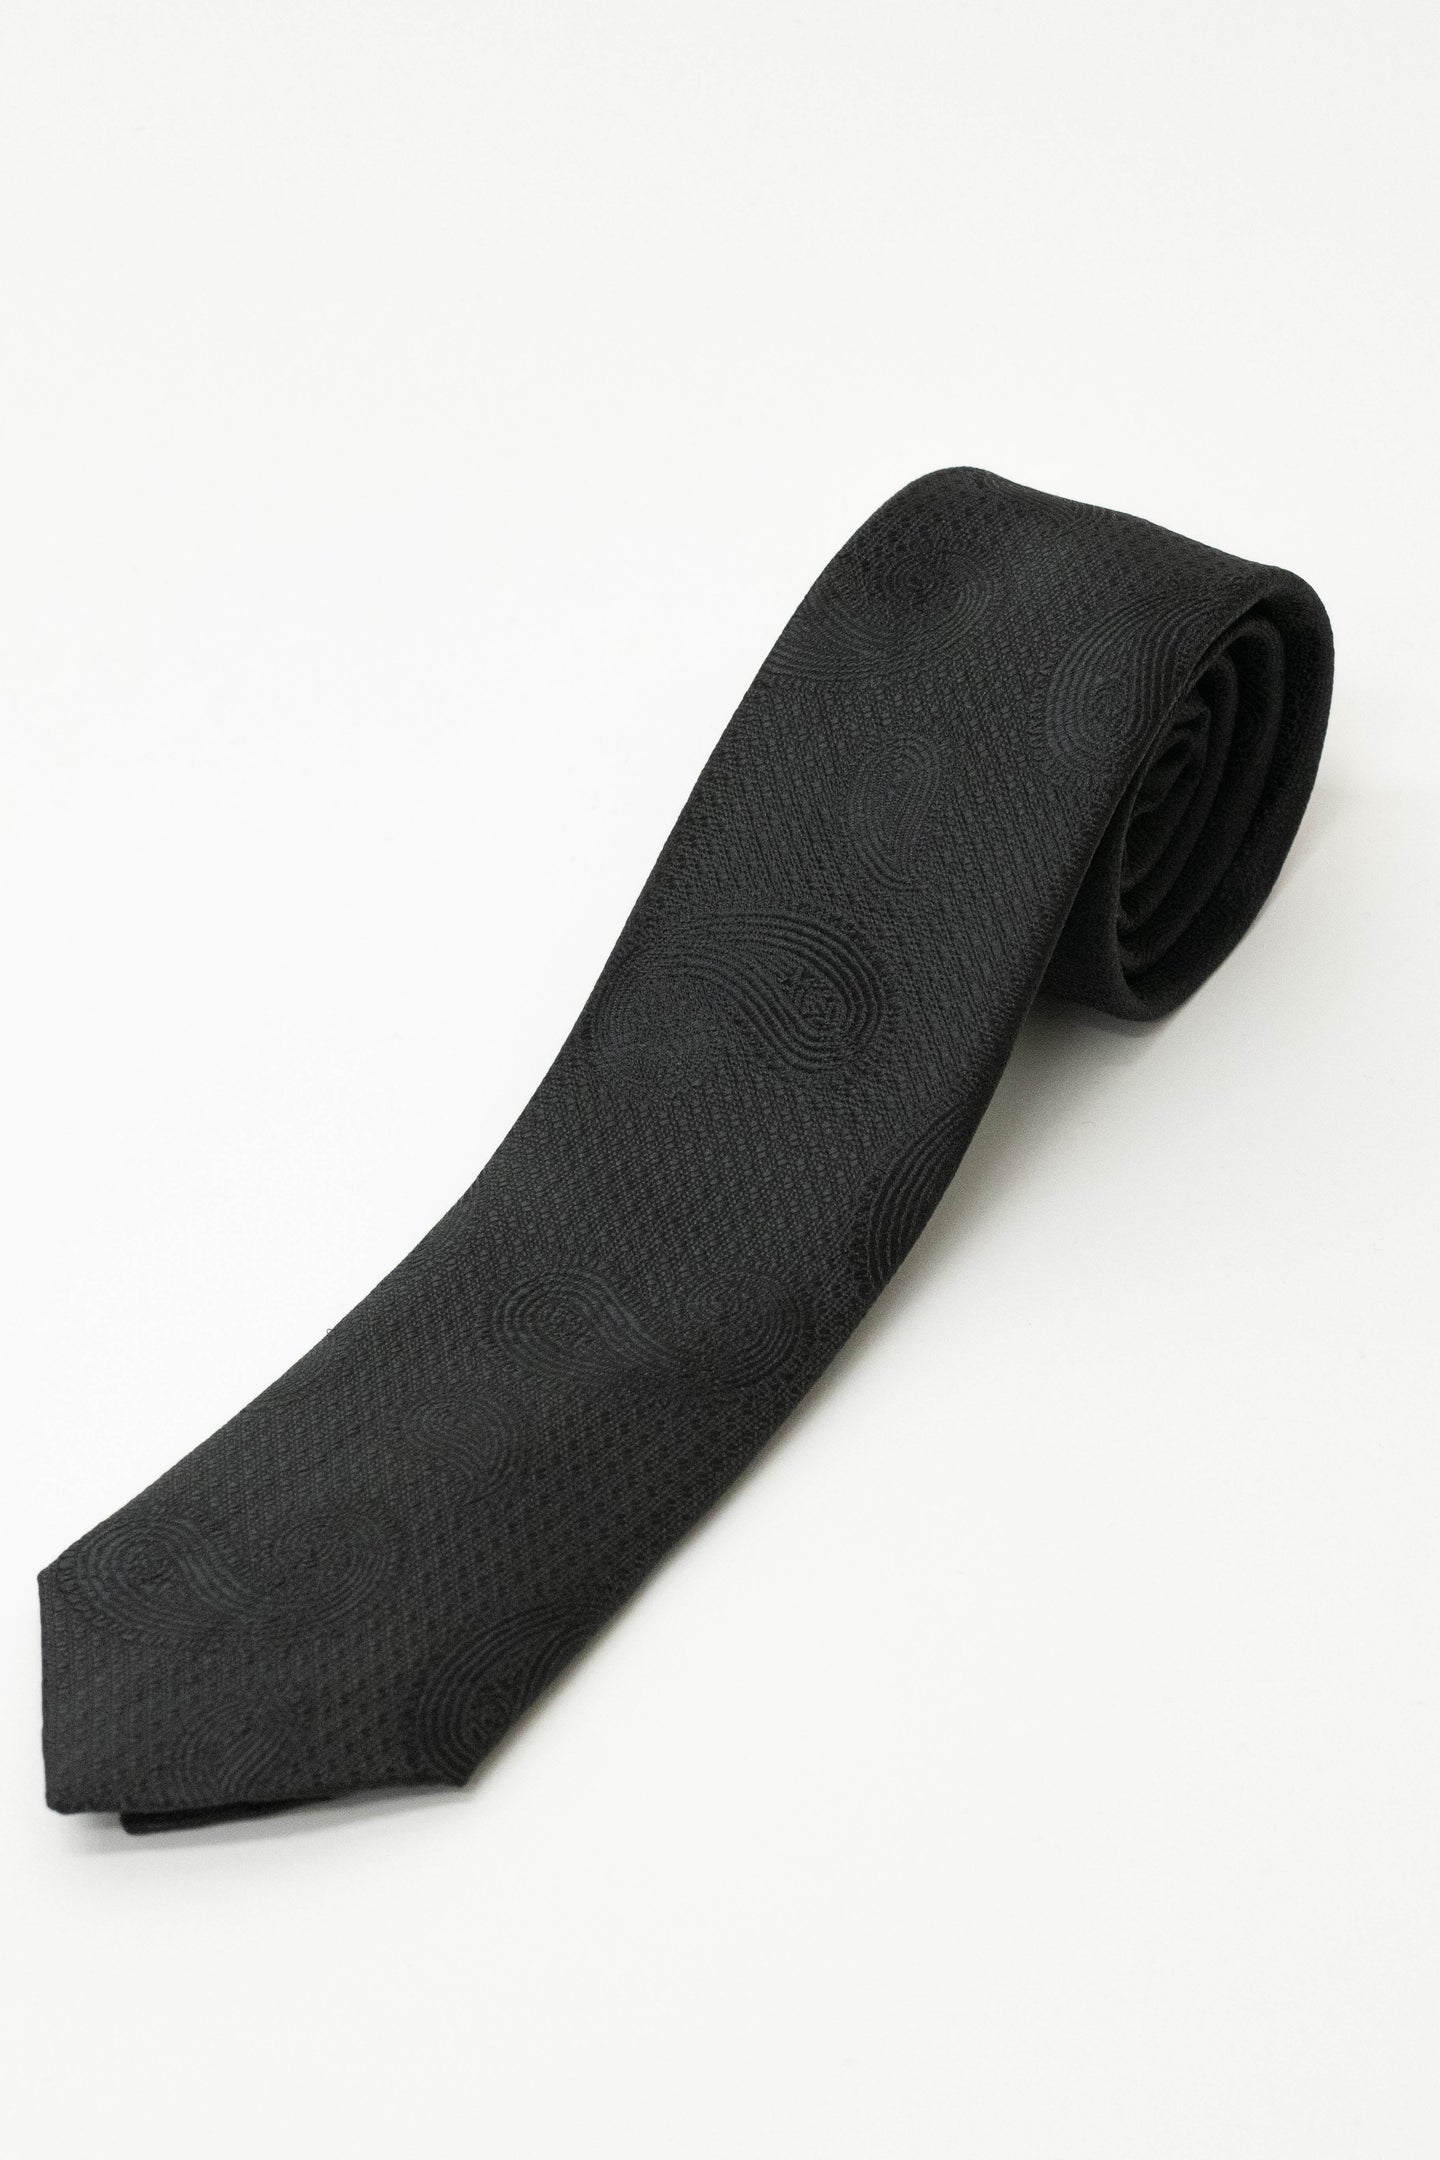 Knightsbridge Neckwear Black Paisley Tie Black